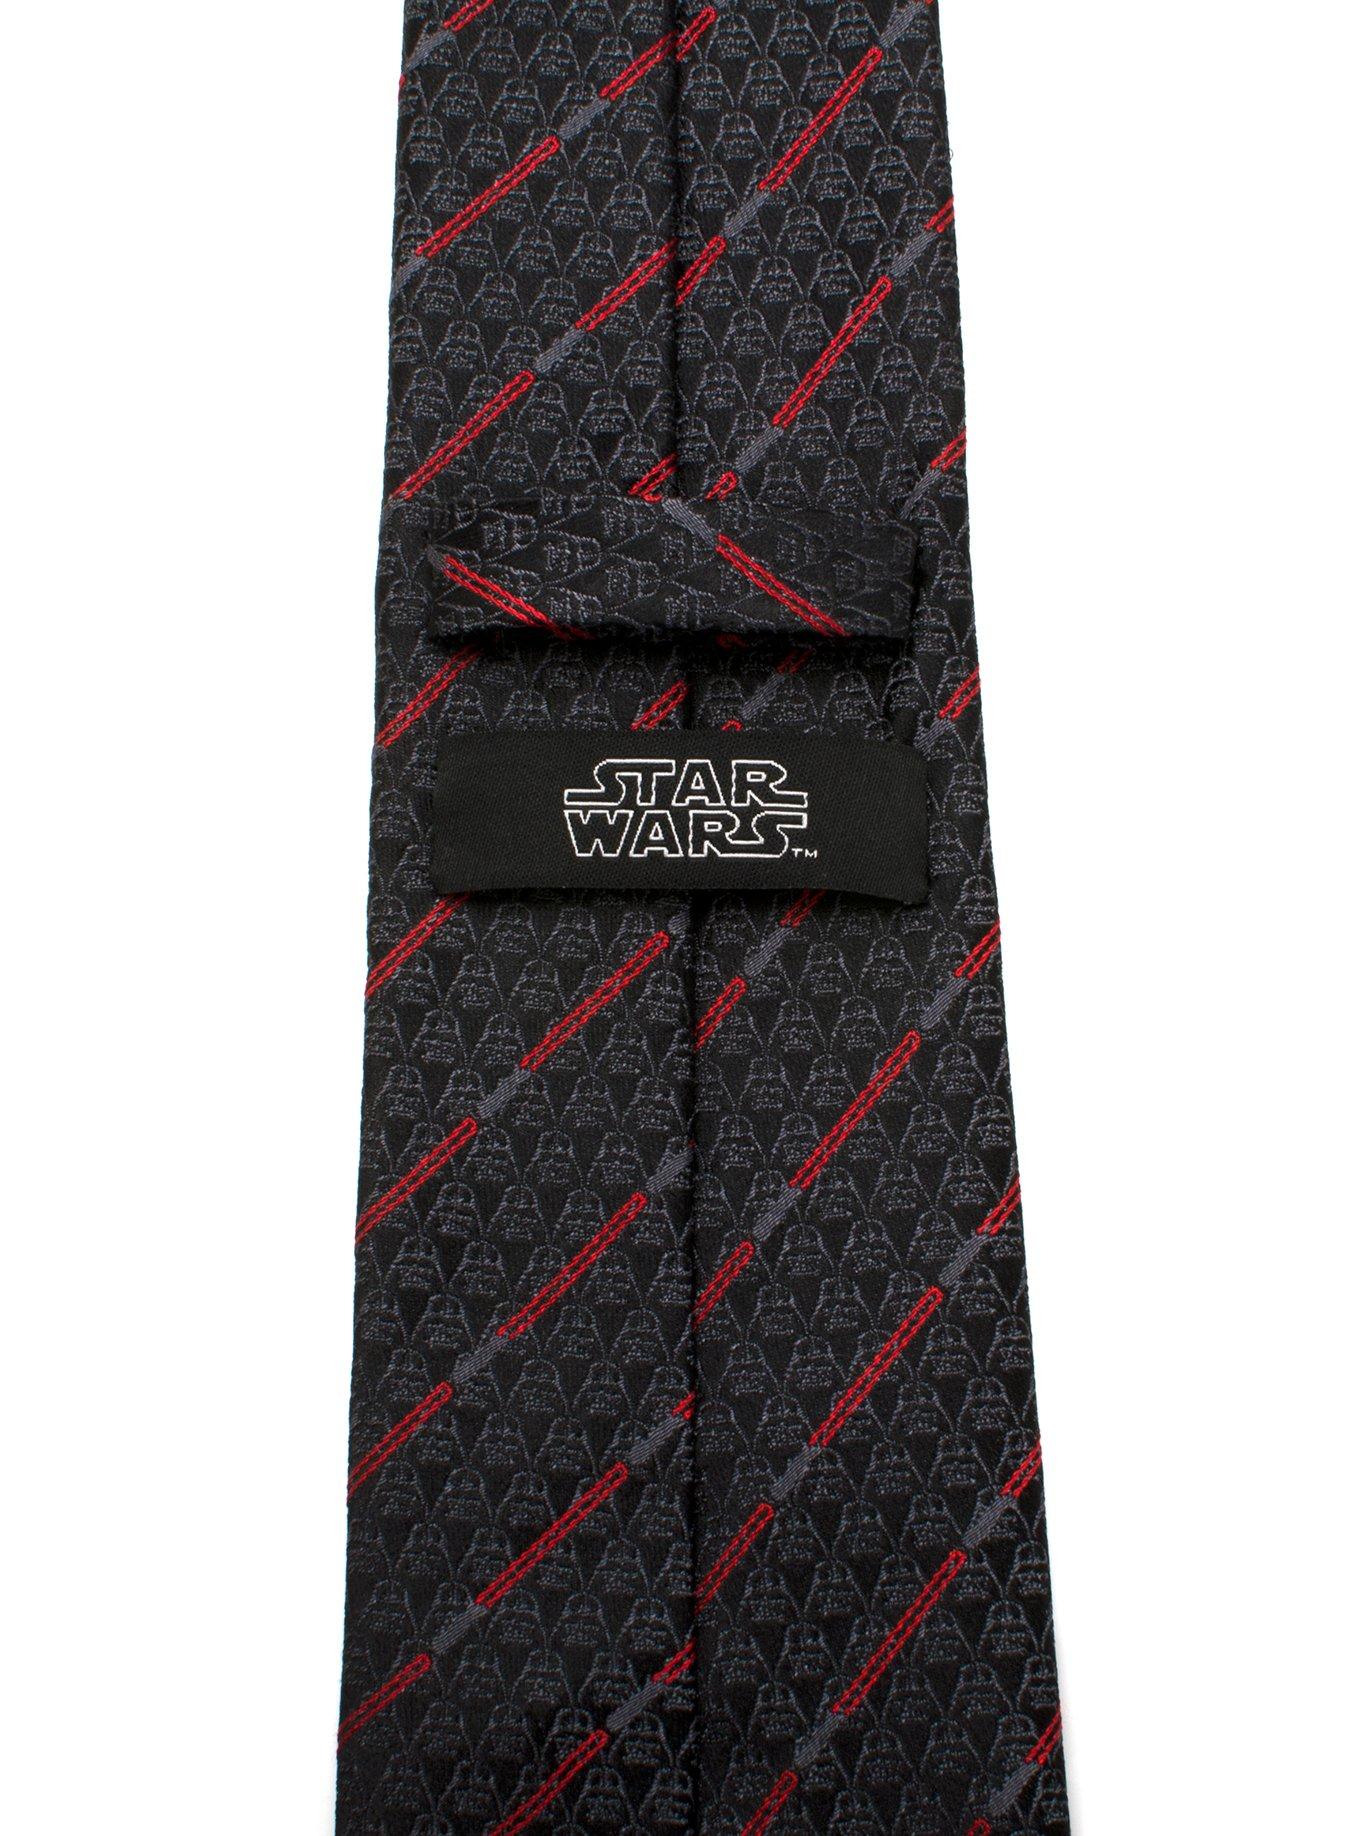 Star Wars Darth Vader Black Lightsaber Stripe Tie